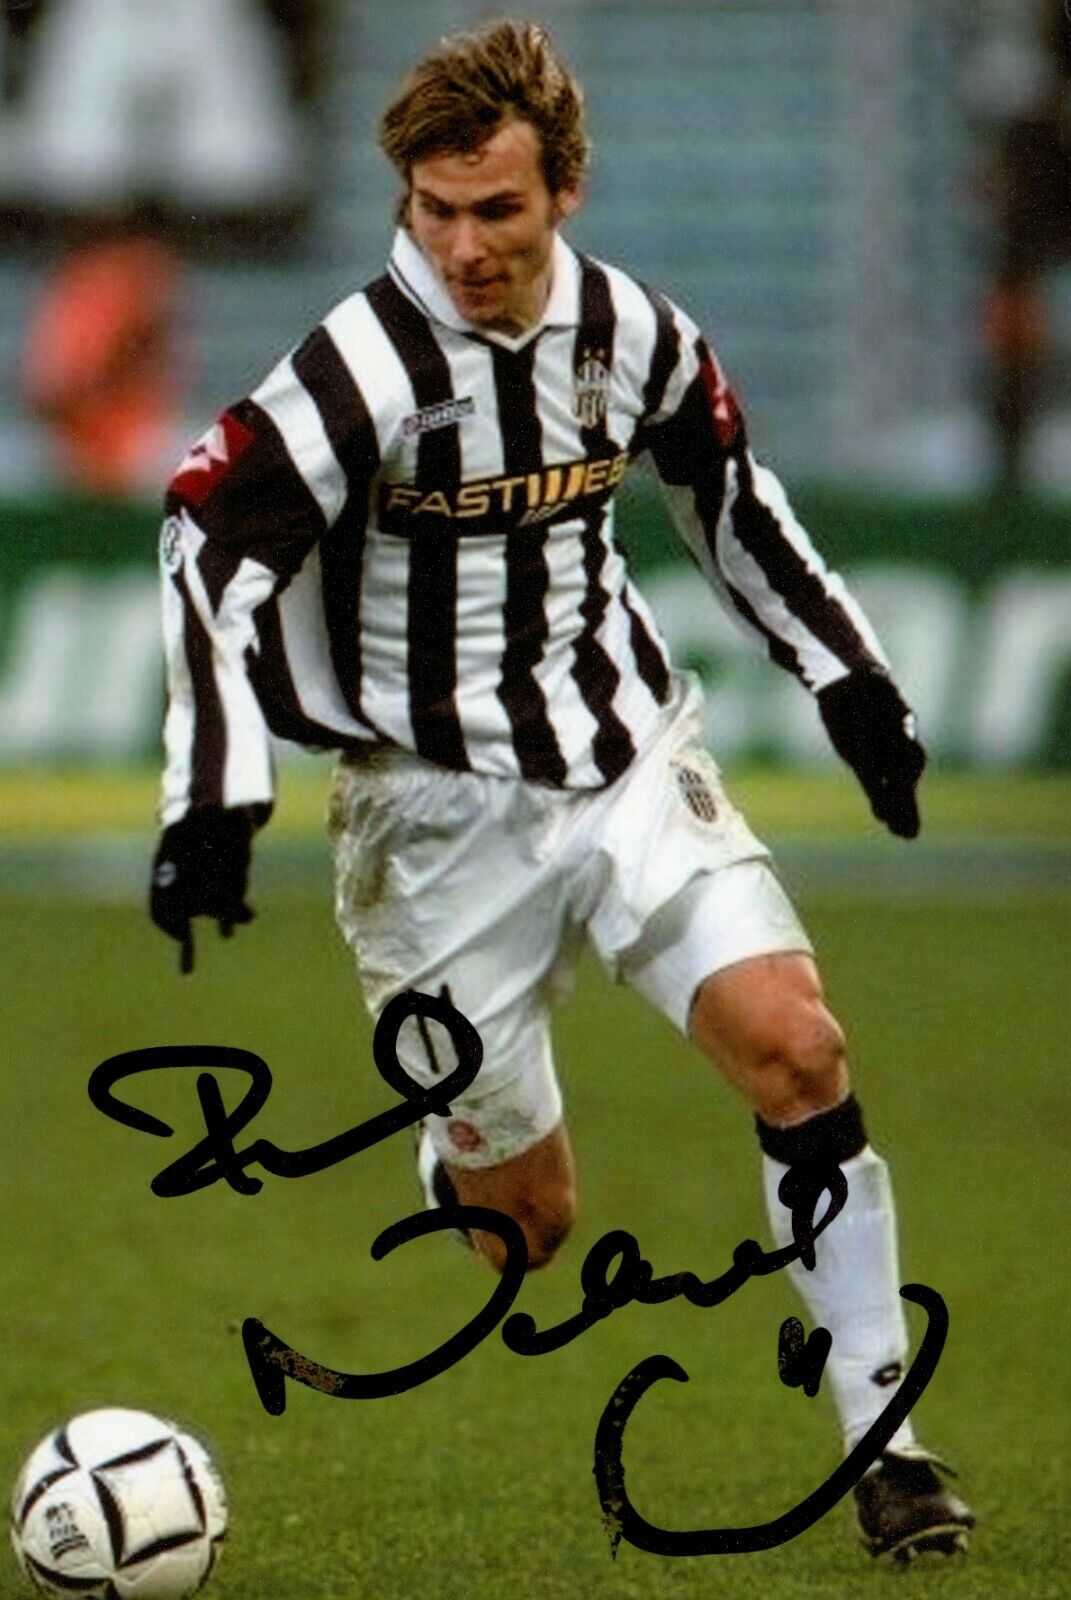 Pavel Nedved Signed 6x4 Photo Poster painting Juventus Czech Republic Autograph Memorabilia +COA